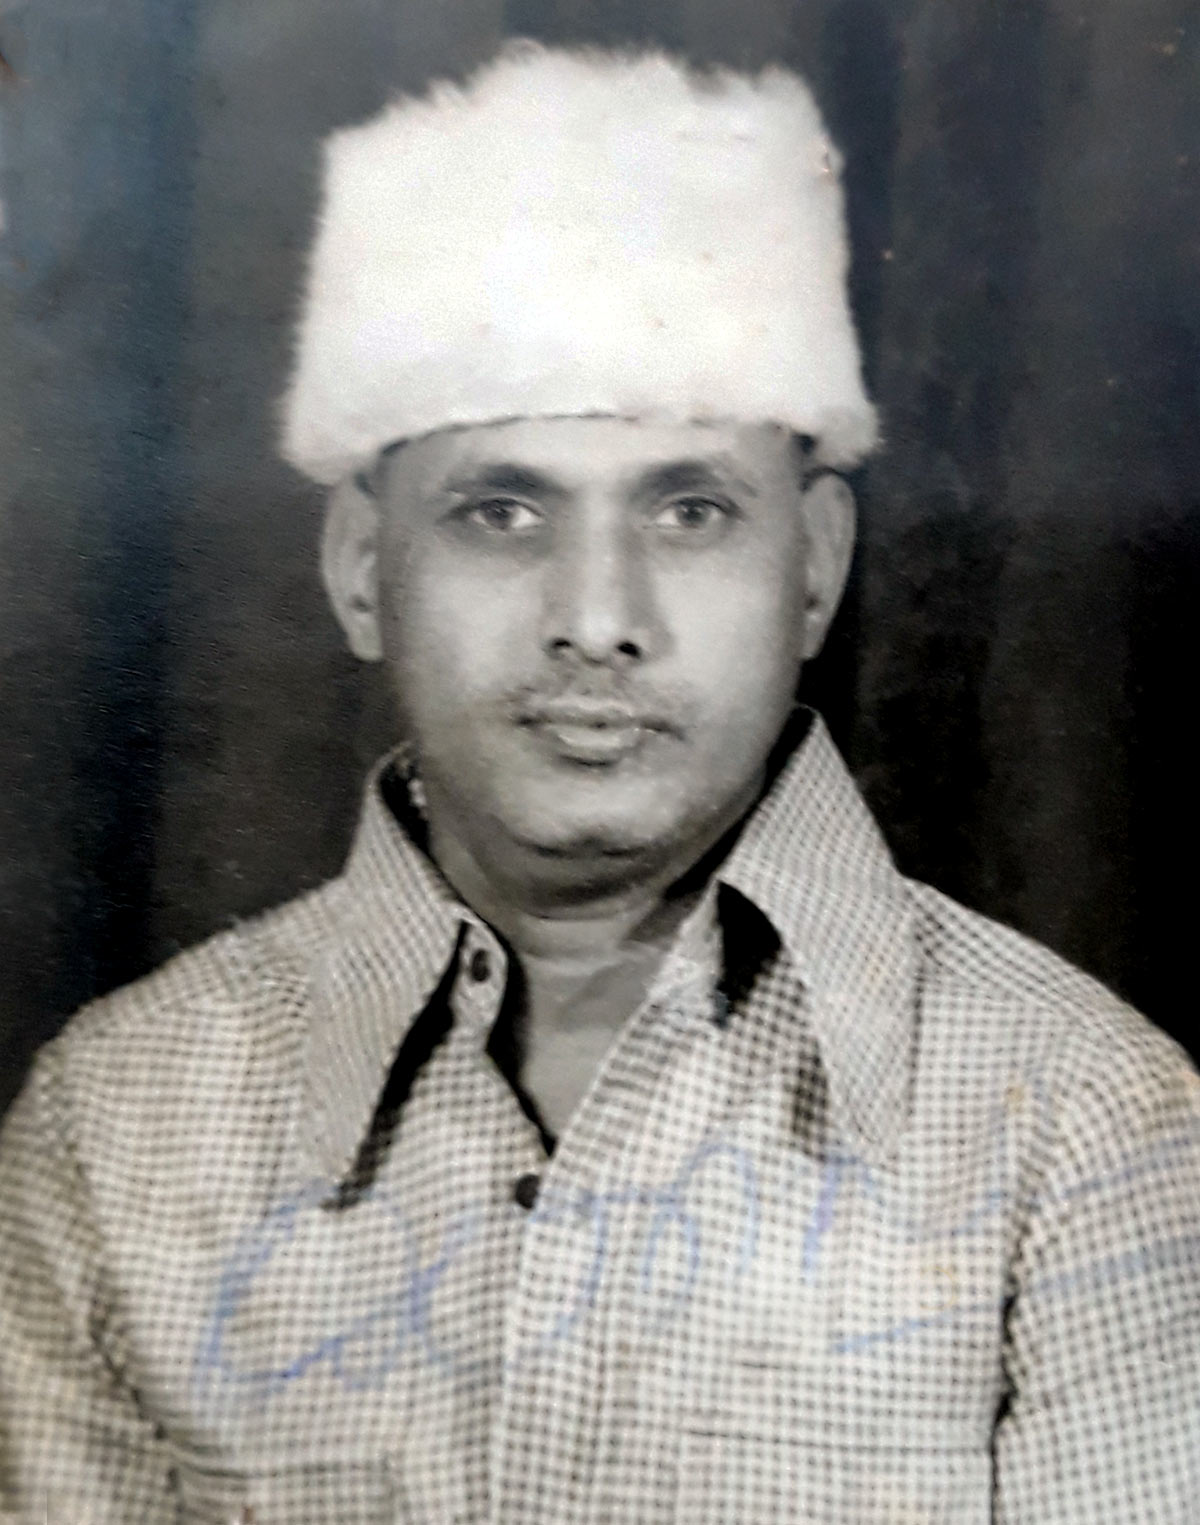 Dr Sreenivas Prasad's father